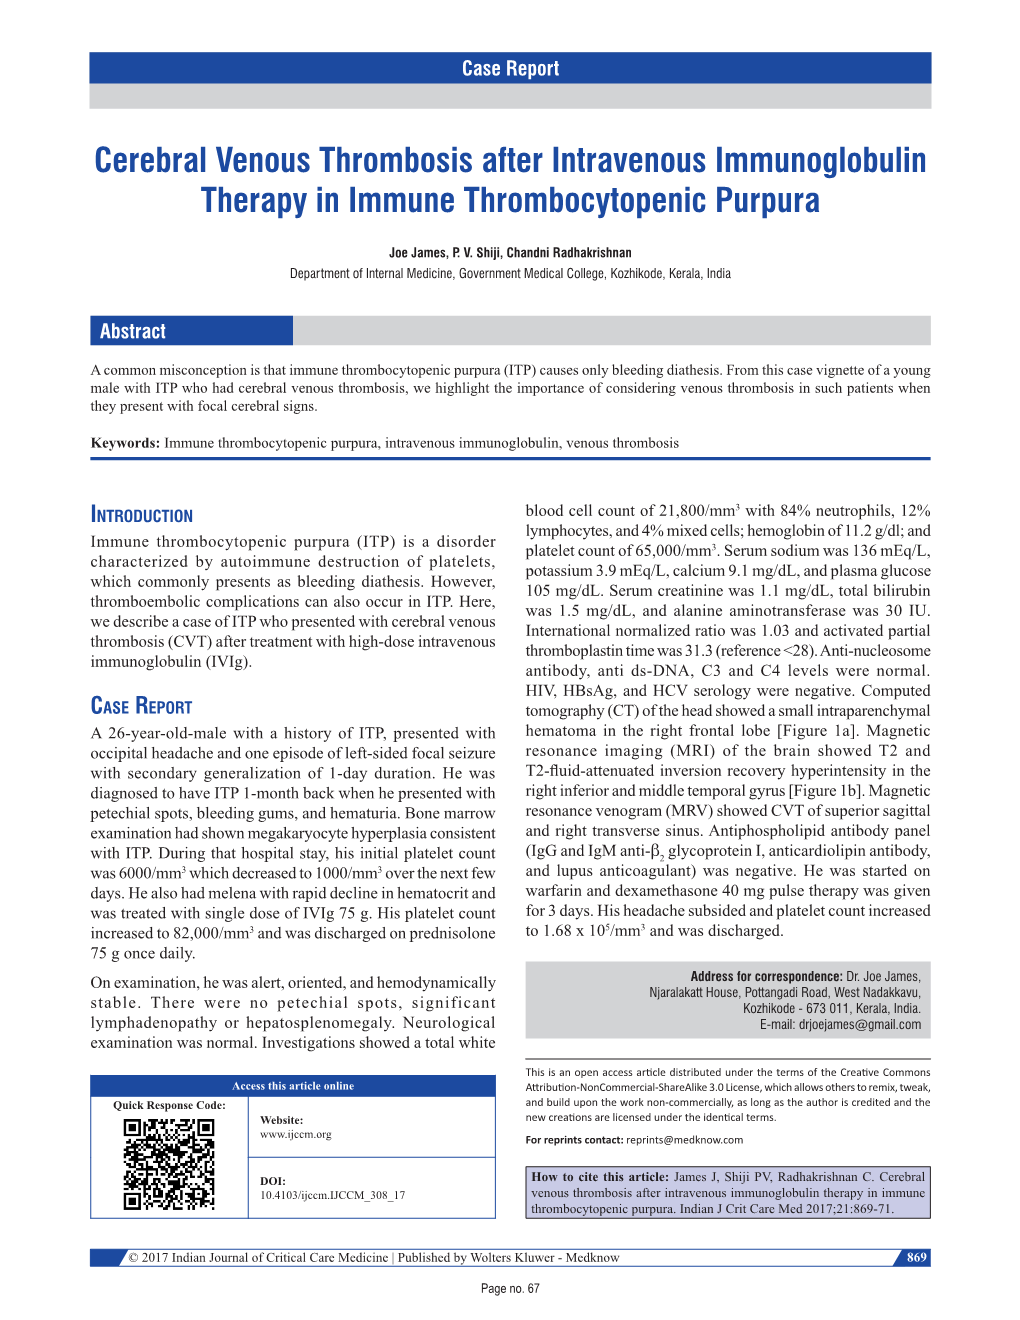 Cerebral Venous Thrombosis After Intravenous Immunoglobulin Therapy in Immune Thrombocytopenic Purpura